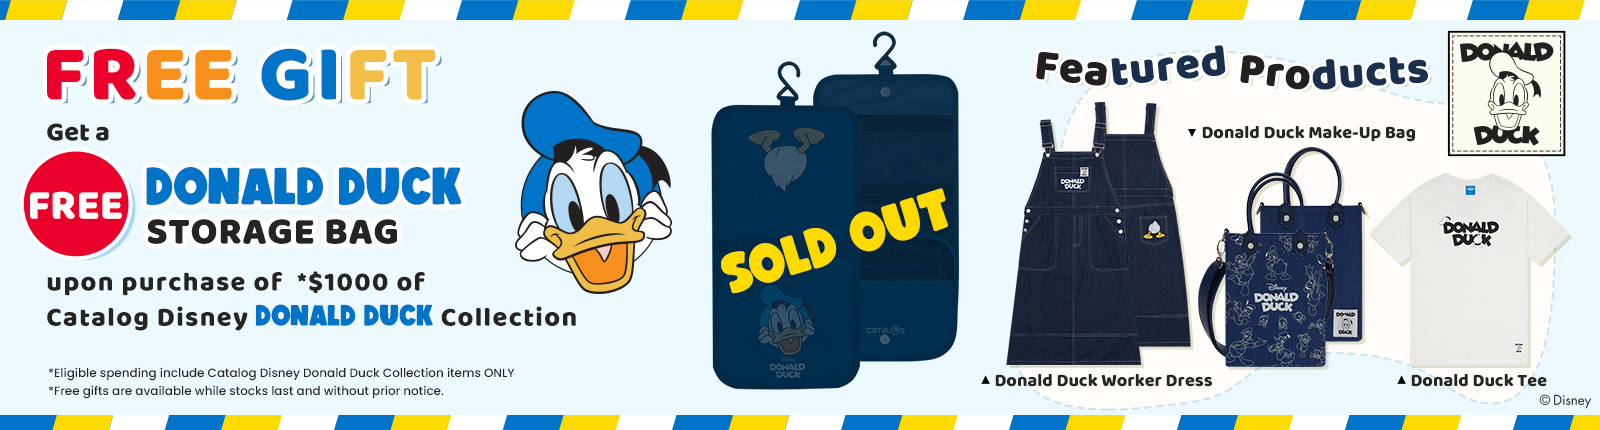 Catalog Disney Donald Duck Collection